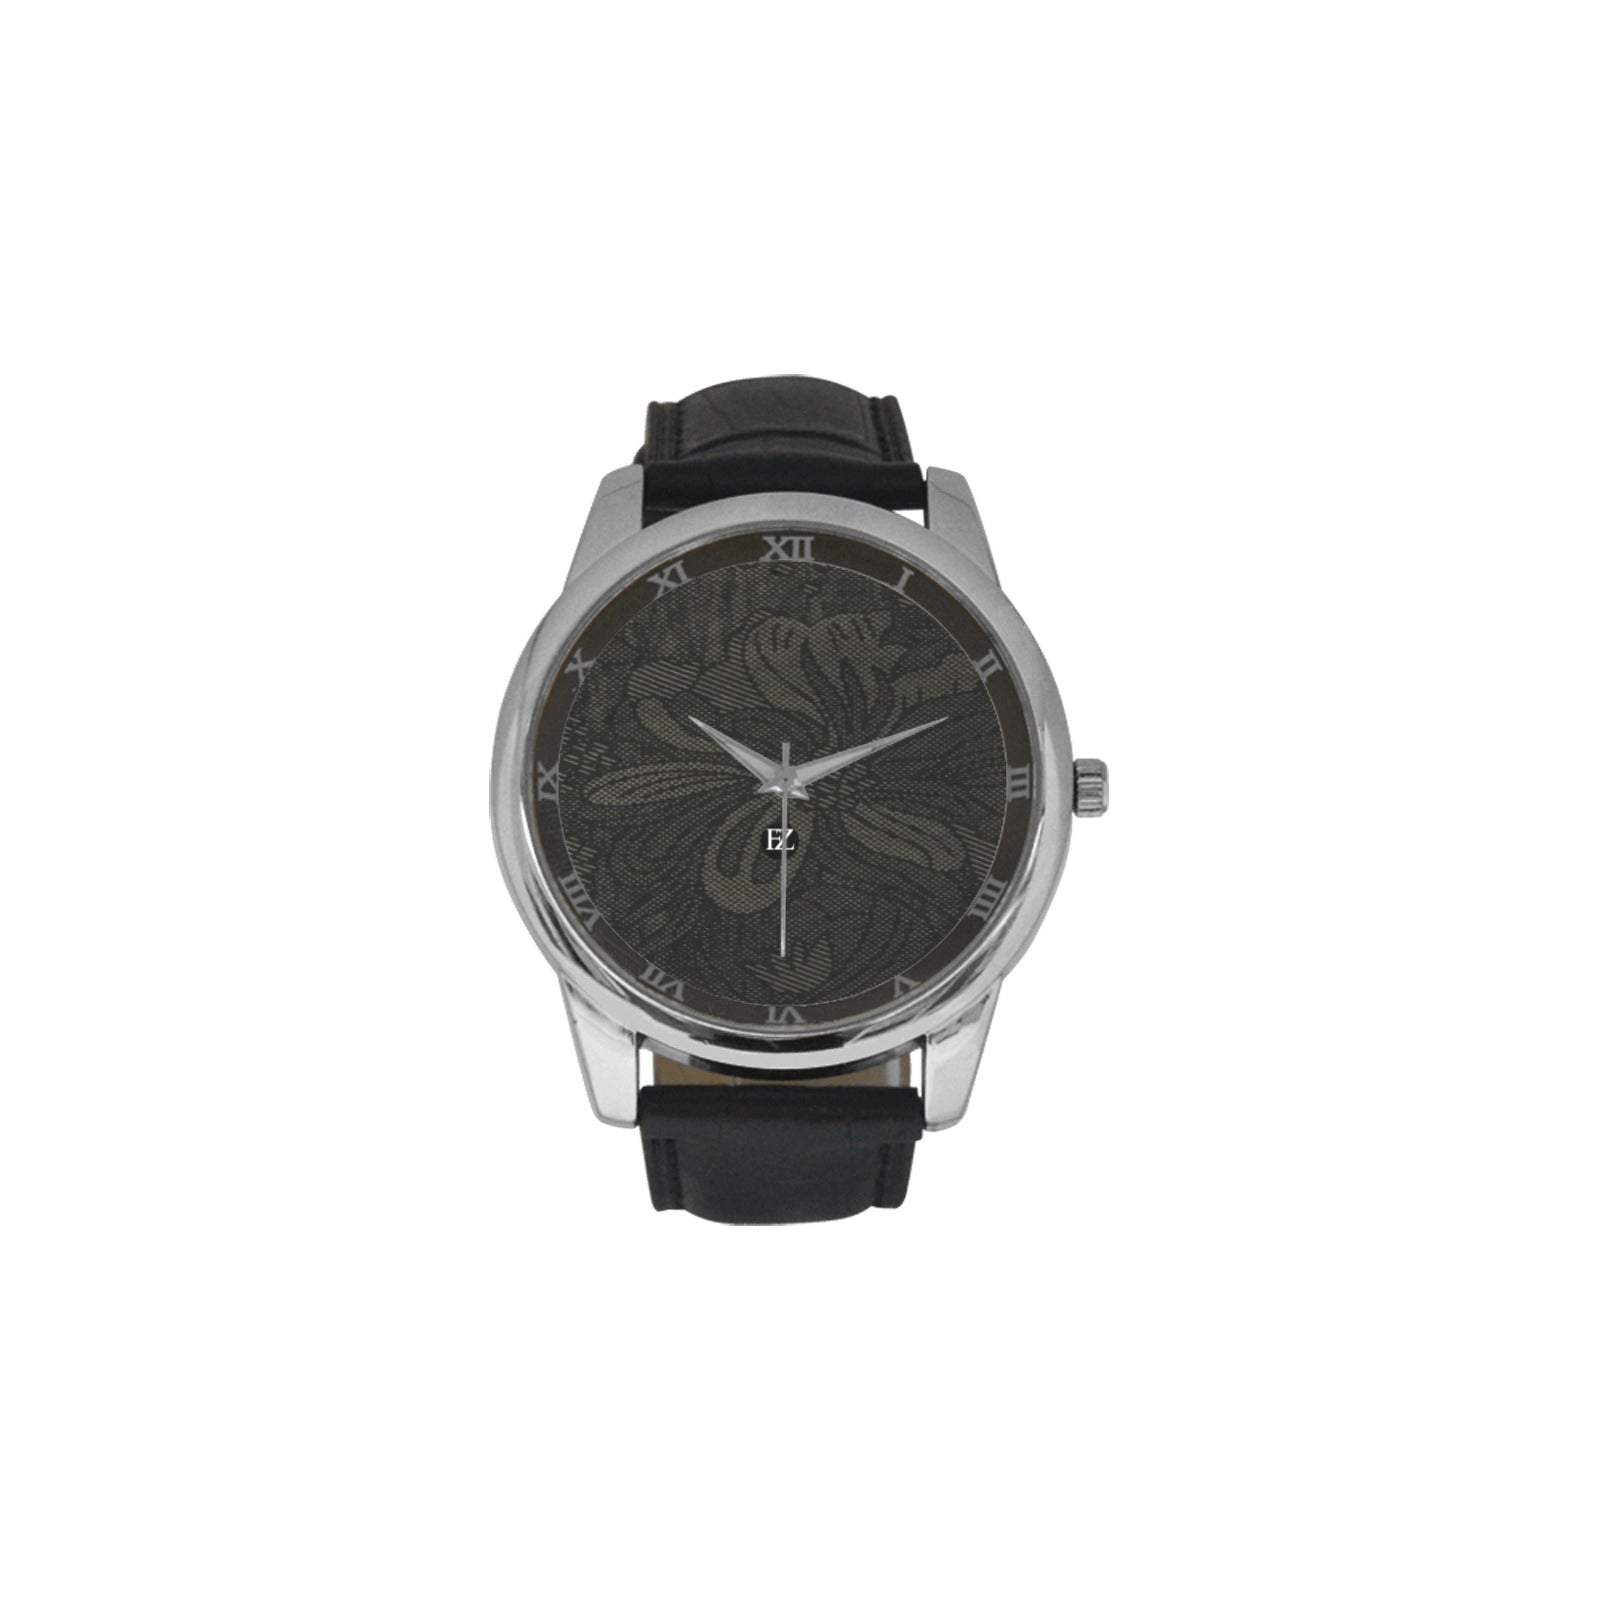 fz men's watch men's leather strap large dial watch (model 213)